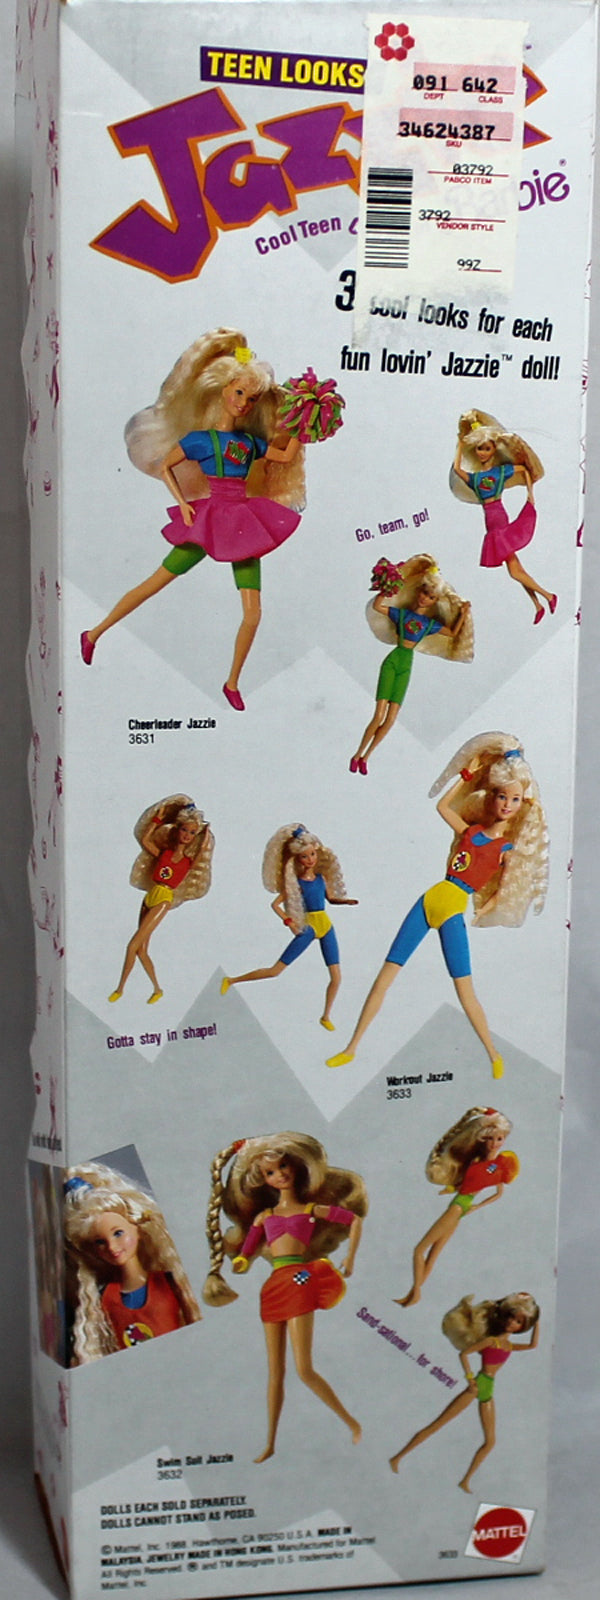 1988 Teen Looks Workout Jazzie Barbie (3633)